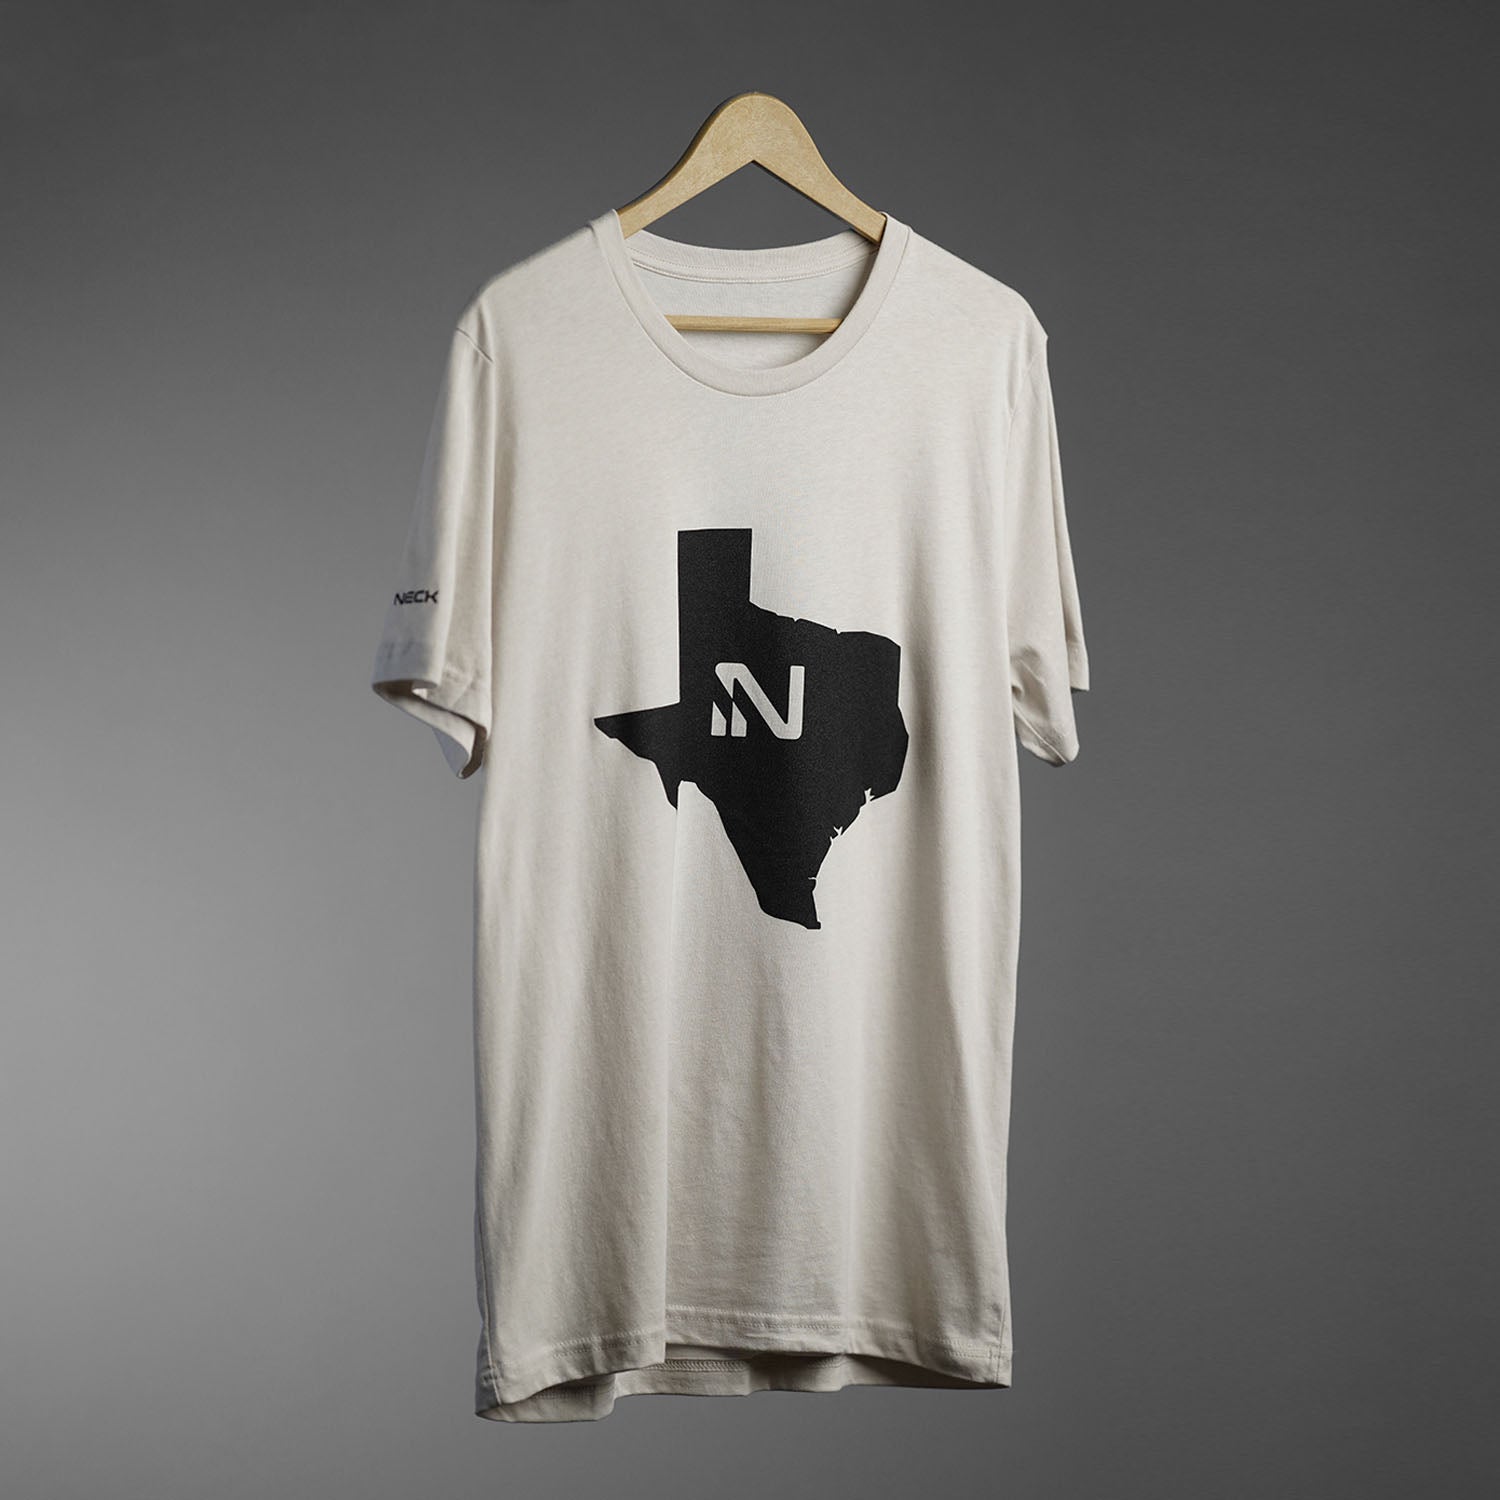 Made in Austin, TX Crew Neck Apparel Iron Neck   